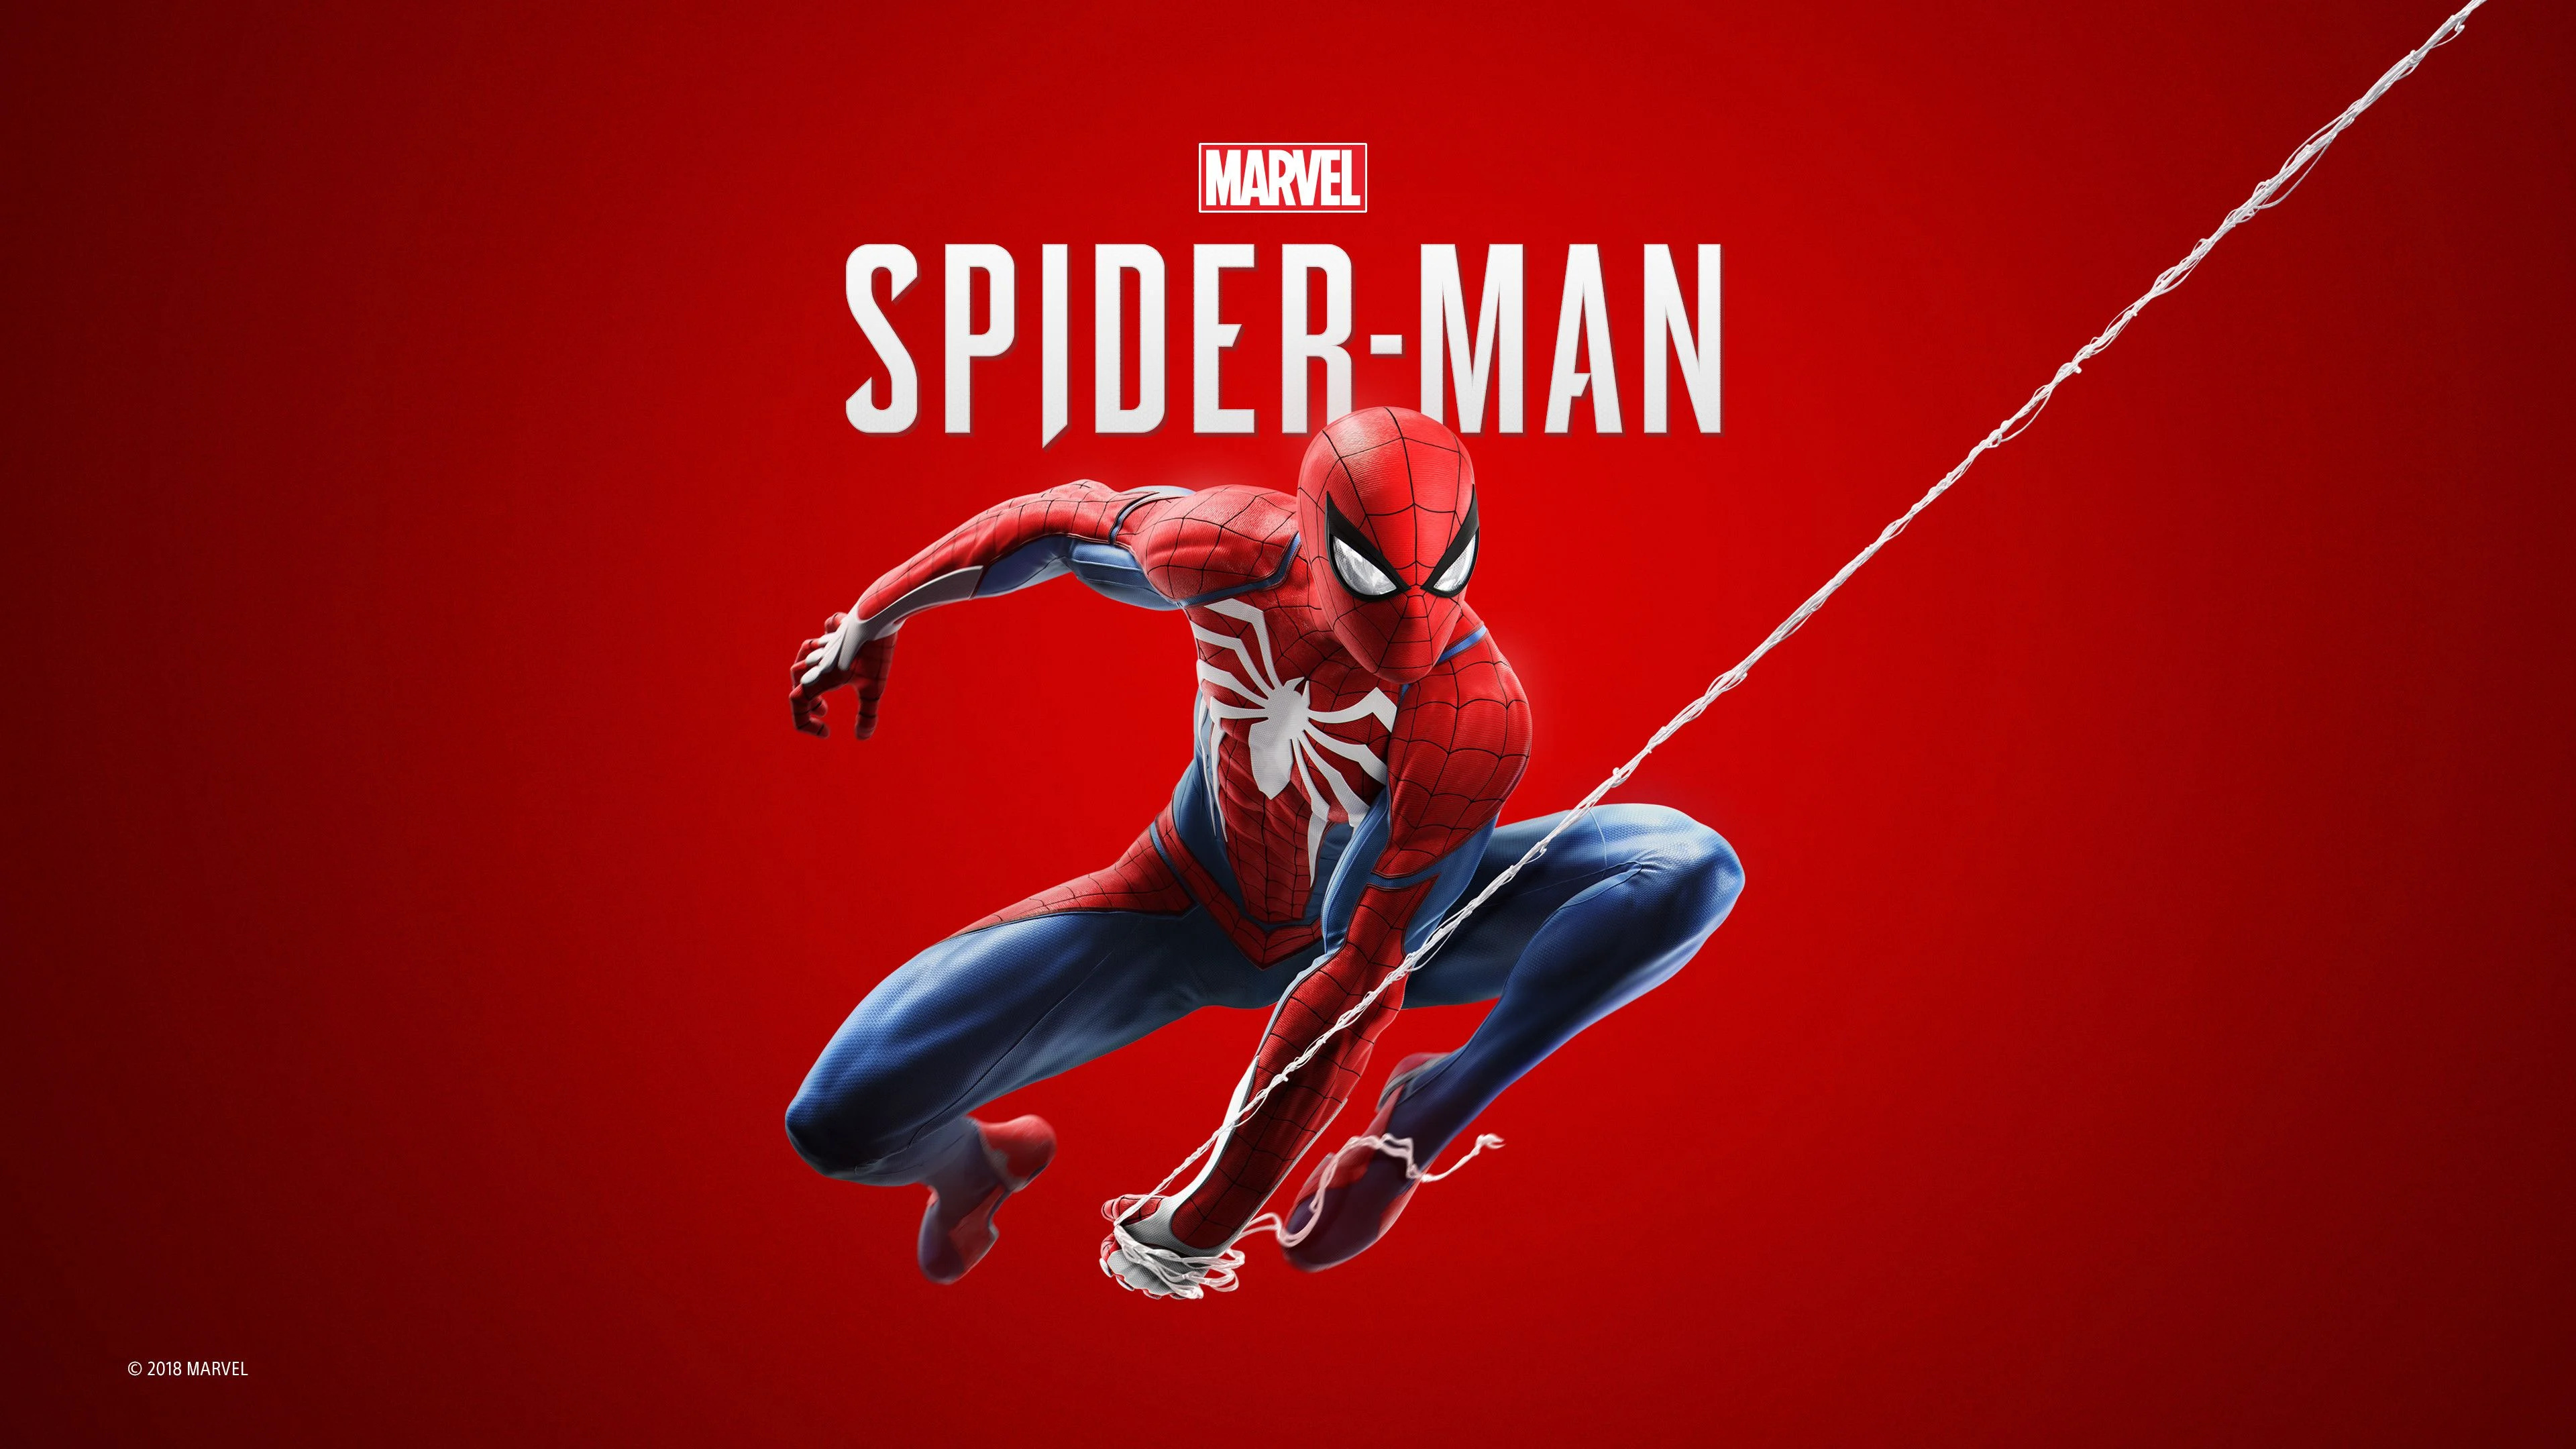 Abstract Spider-Man laptop wallpapers, Top free backgrounds, 3840x2160 4K Desktop